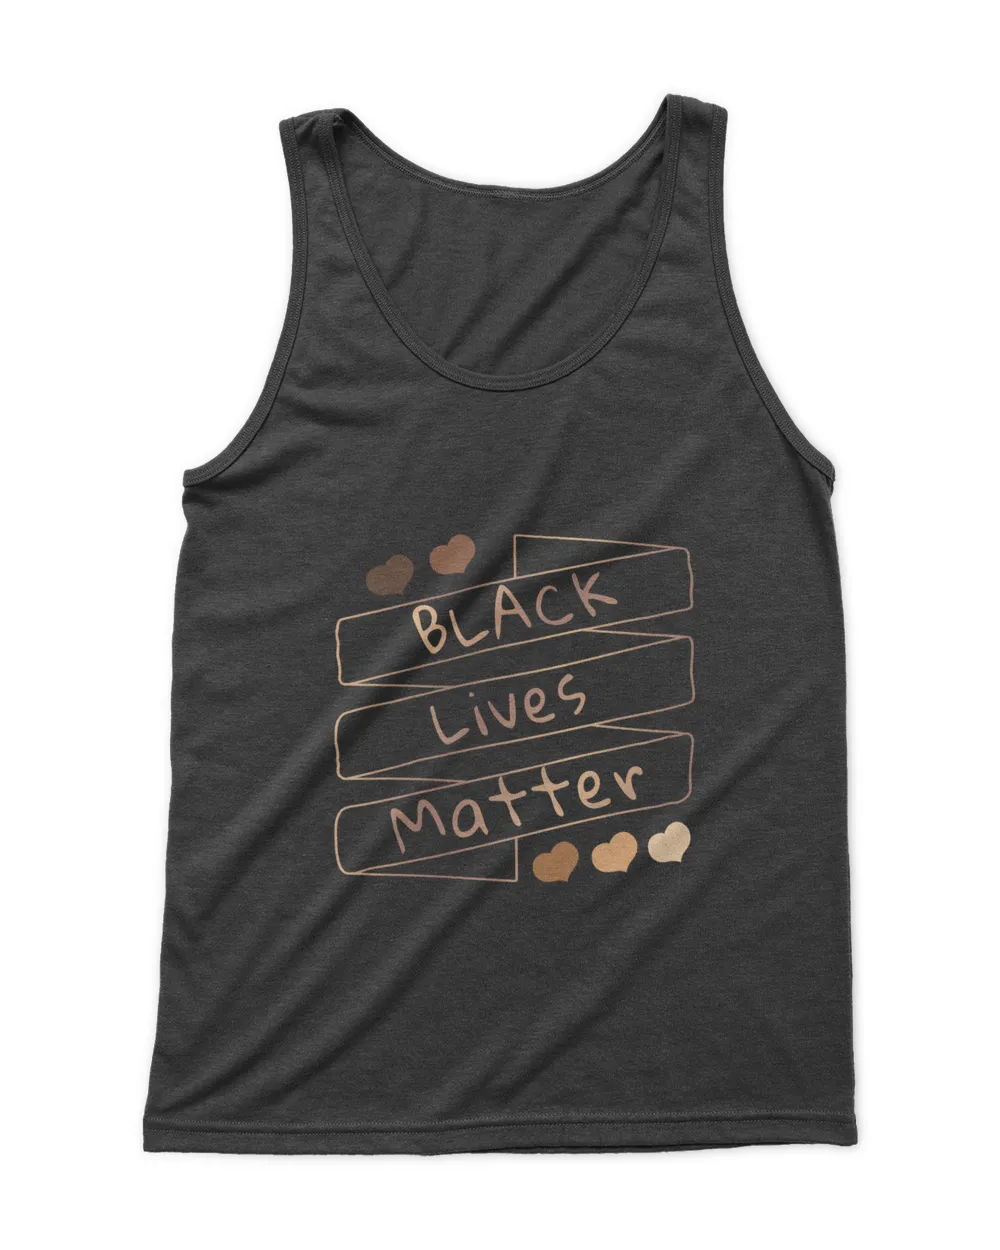 RD Black Lives Matter Shirt, Melanin Hearts Shirt, Melanin Shirt, Inspirational Shirt, Kindness Shirt, Black Girl Shirt